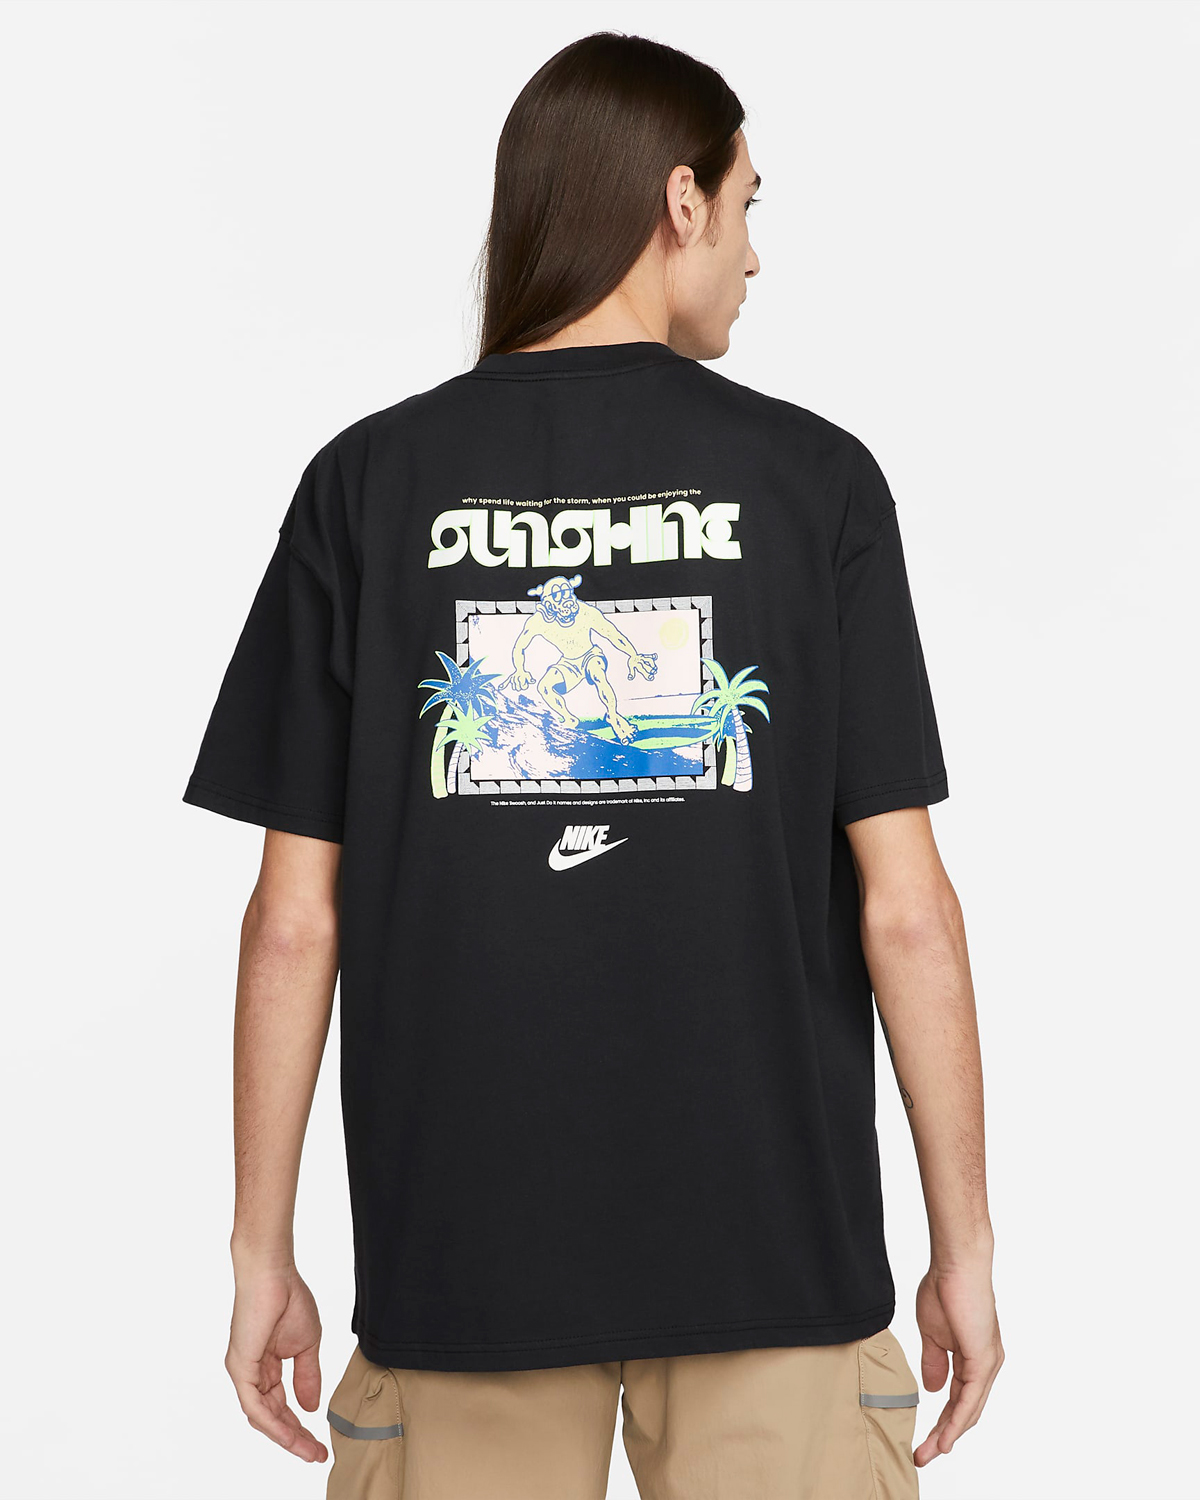 Nike-Sportswear-Surf-Dog-T-Shirt-Black-2